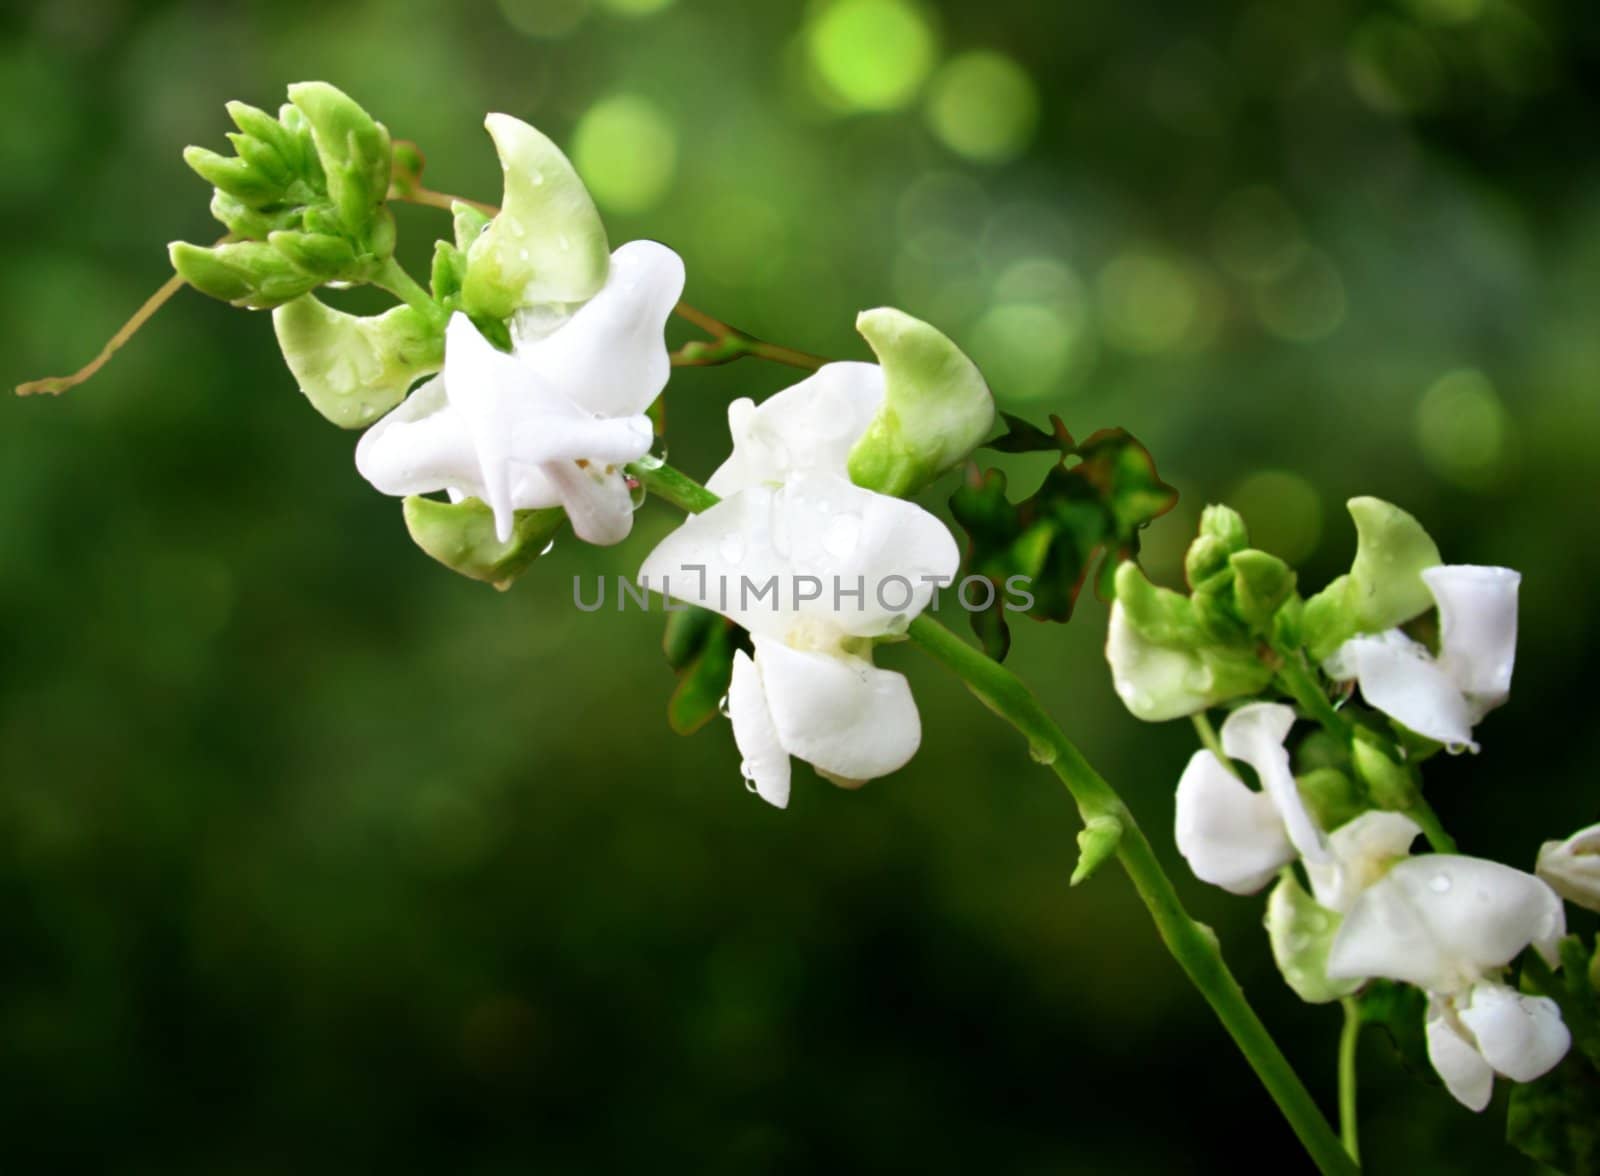 green beans (Phaseolus vulgaris) flower by lkant